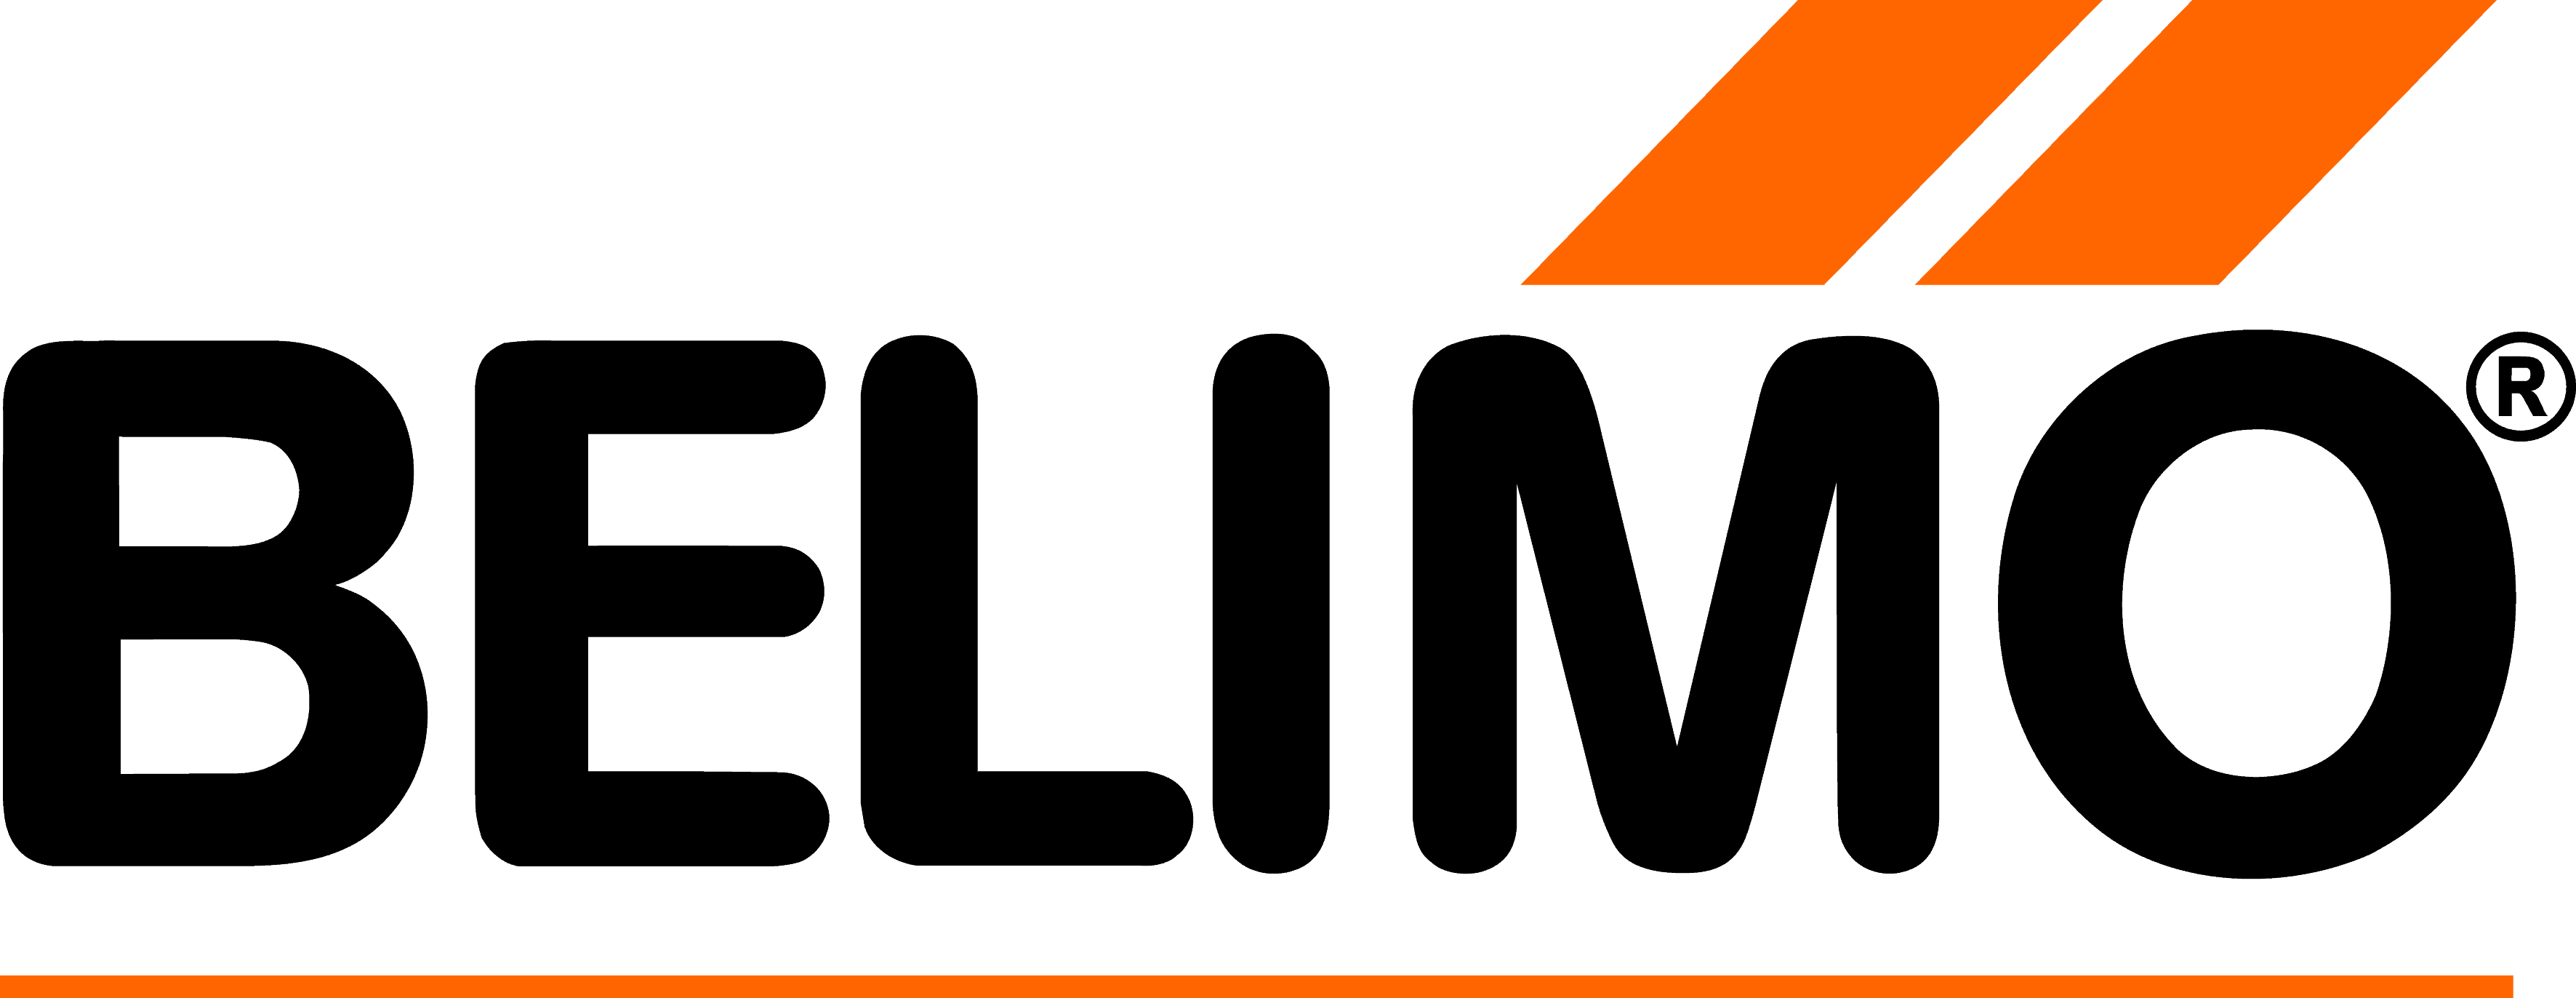 Belimo Logo Orange